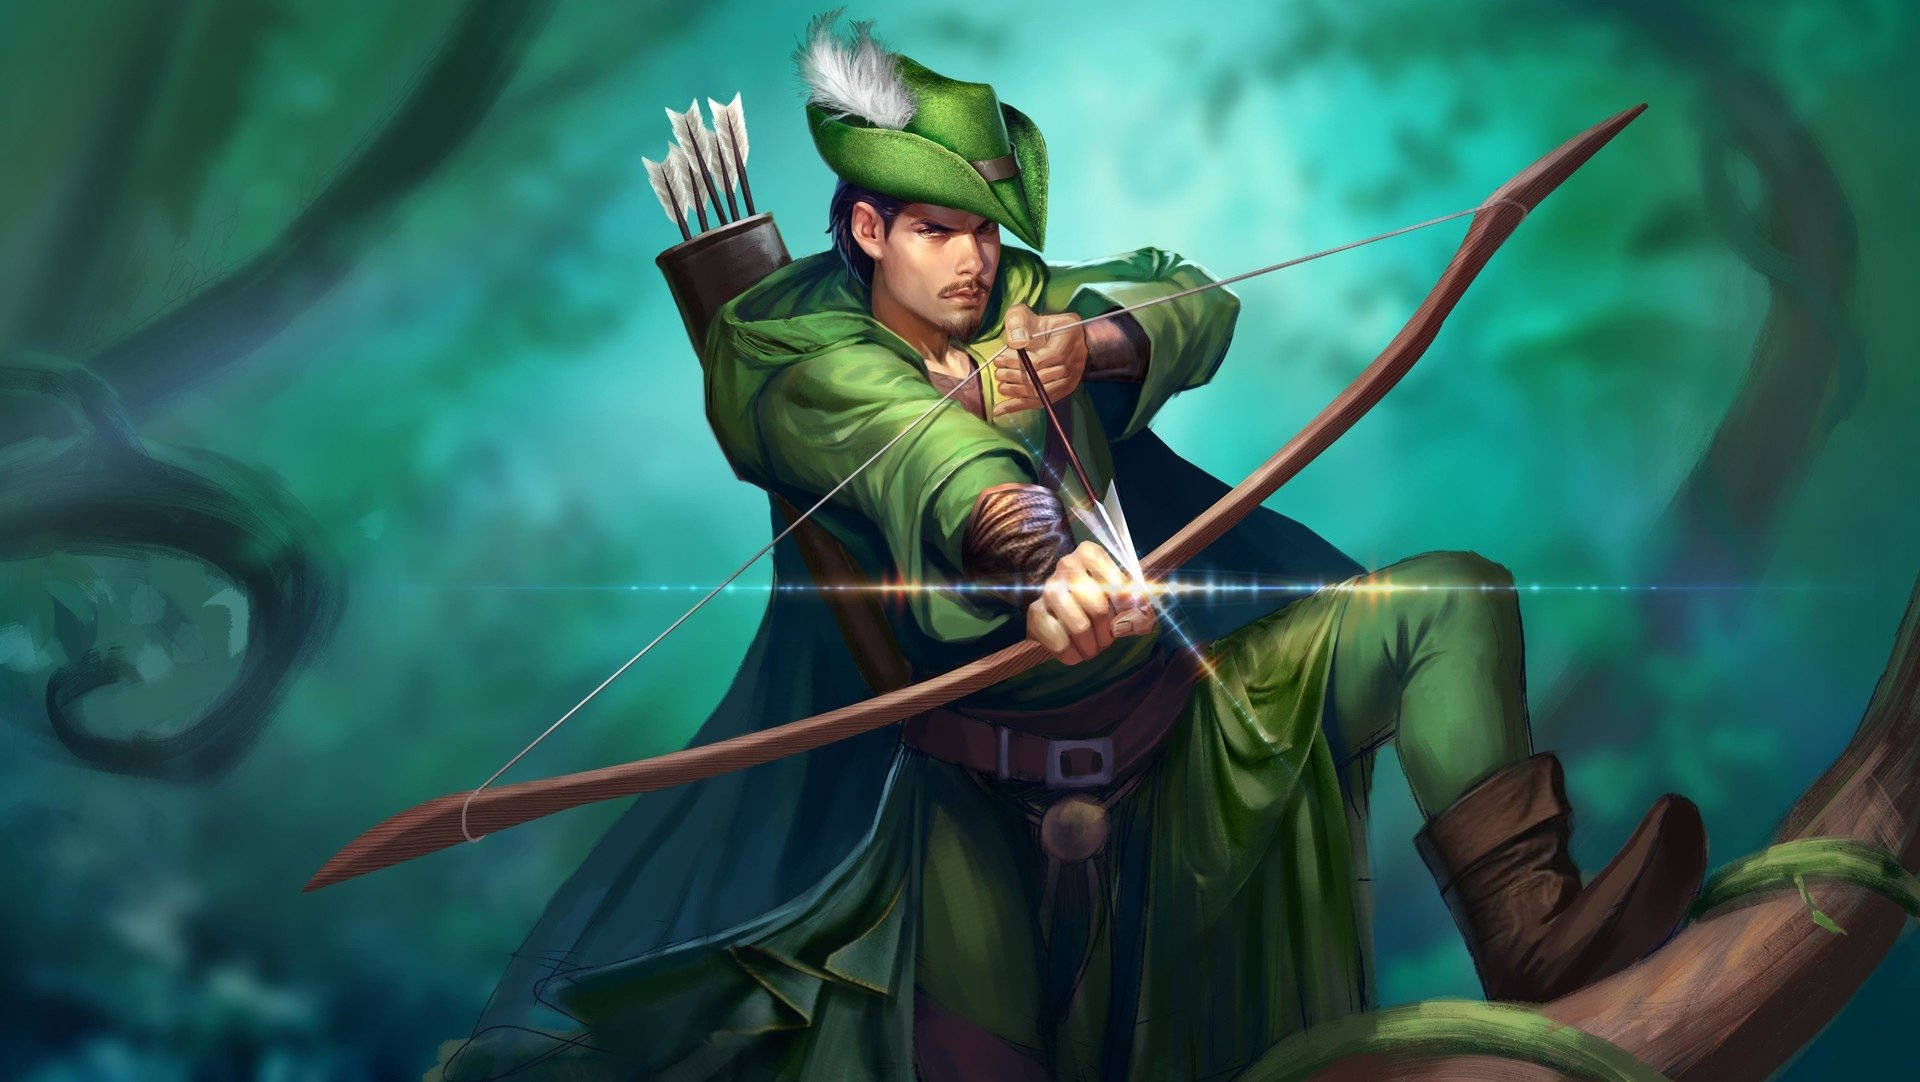 Archery Robin Hood Digital Art Background